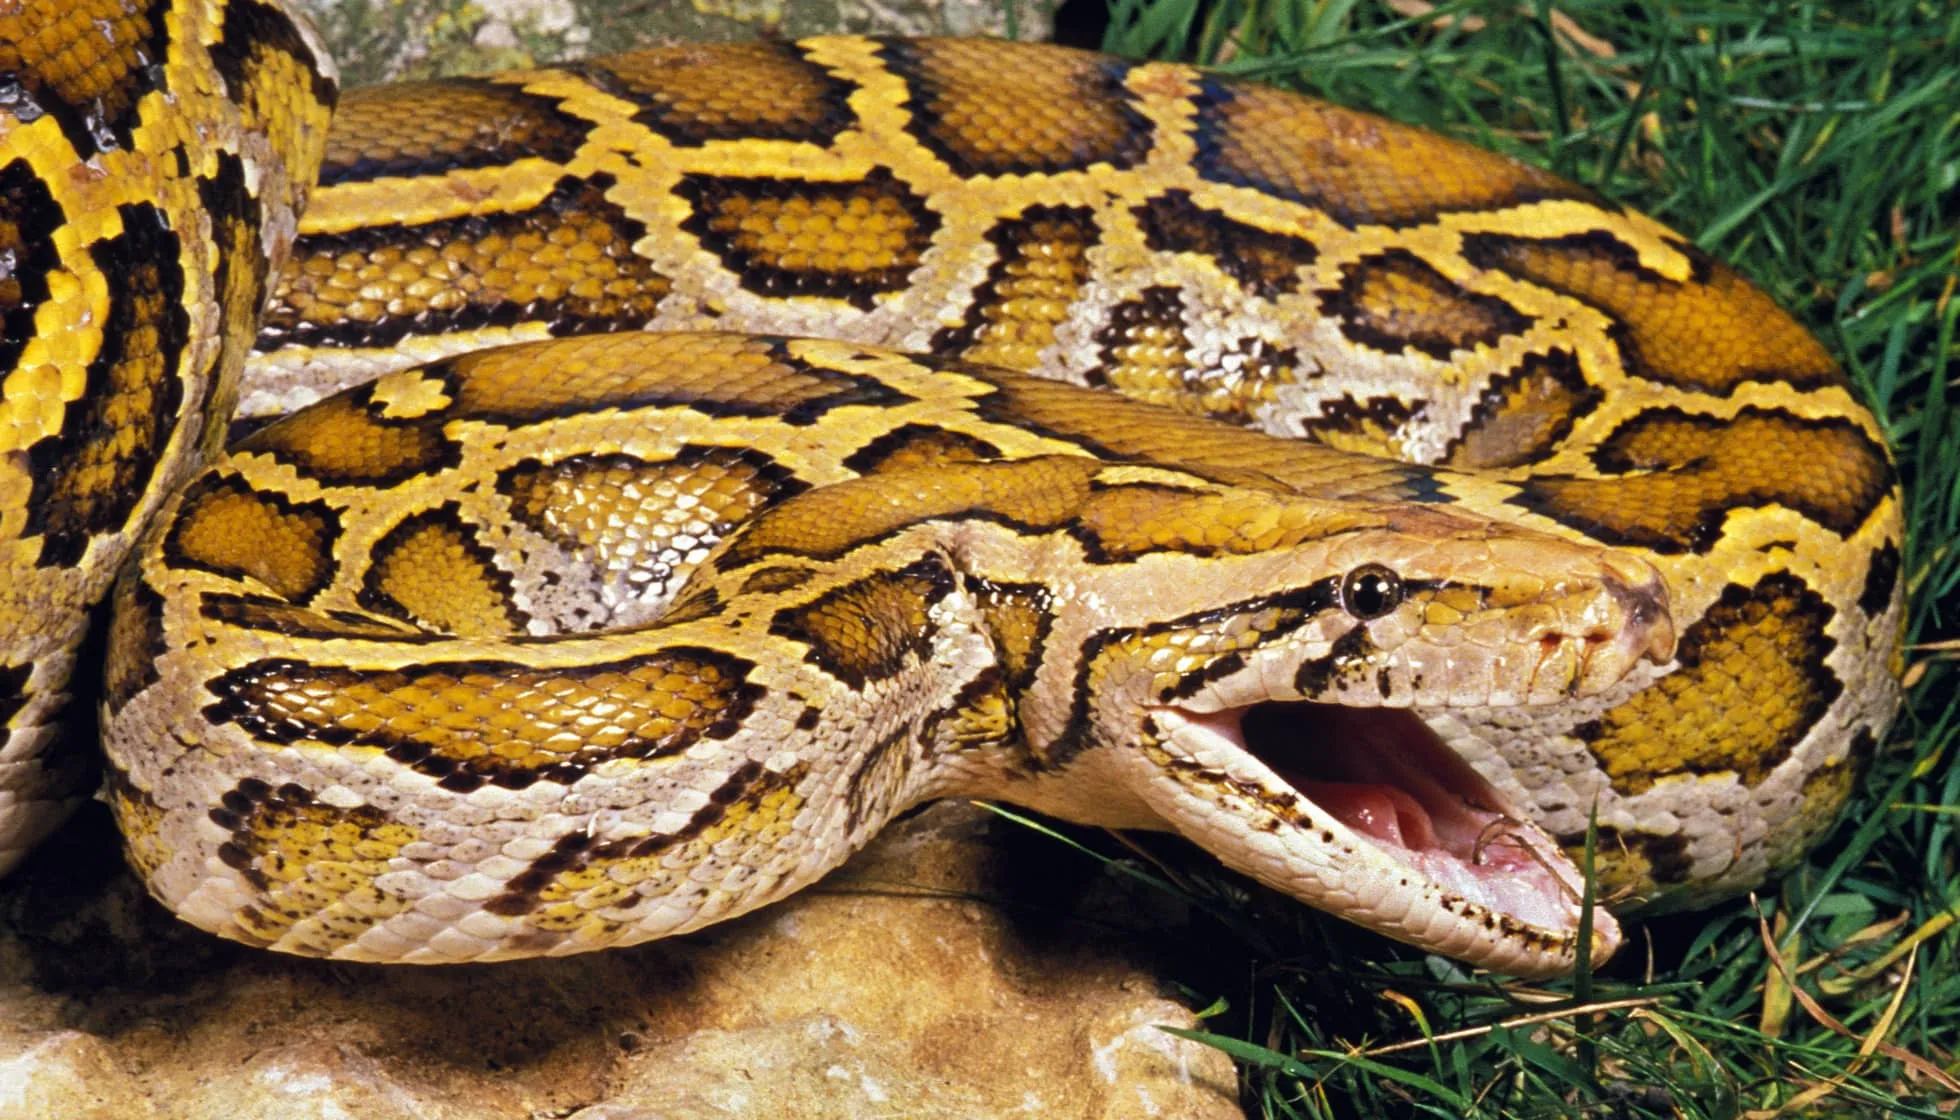  Indian Python